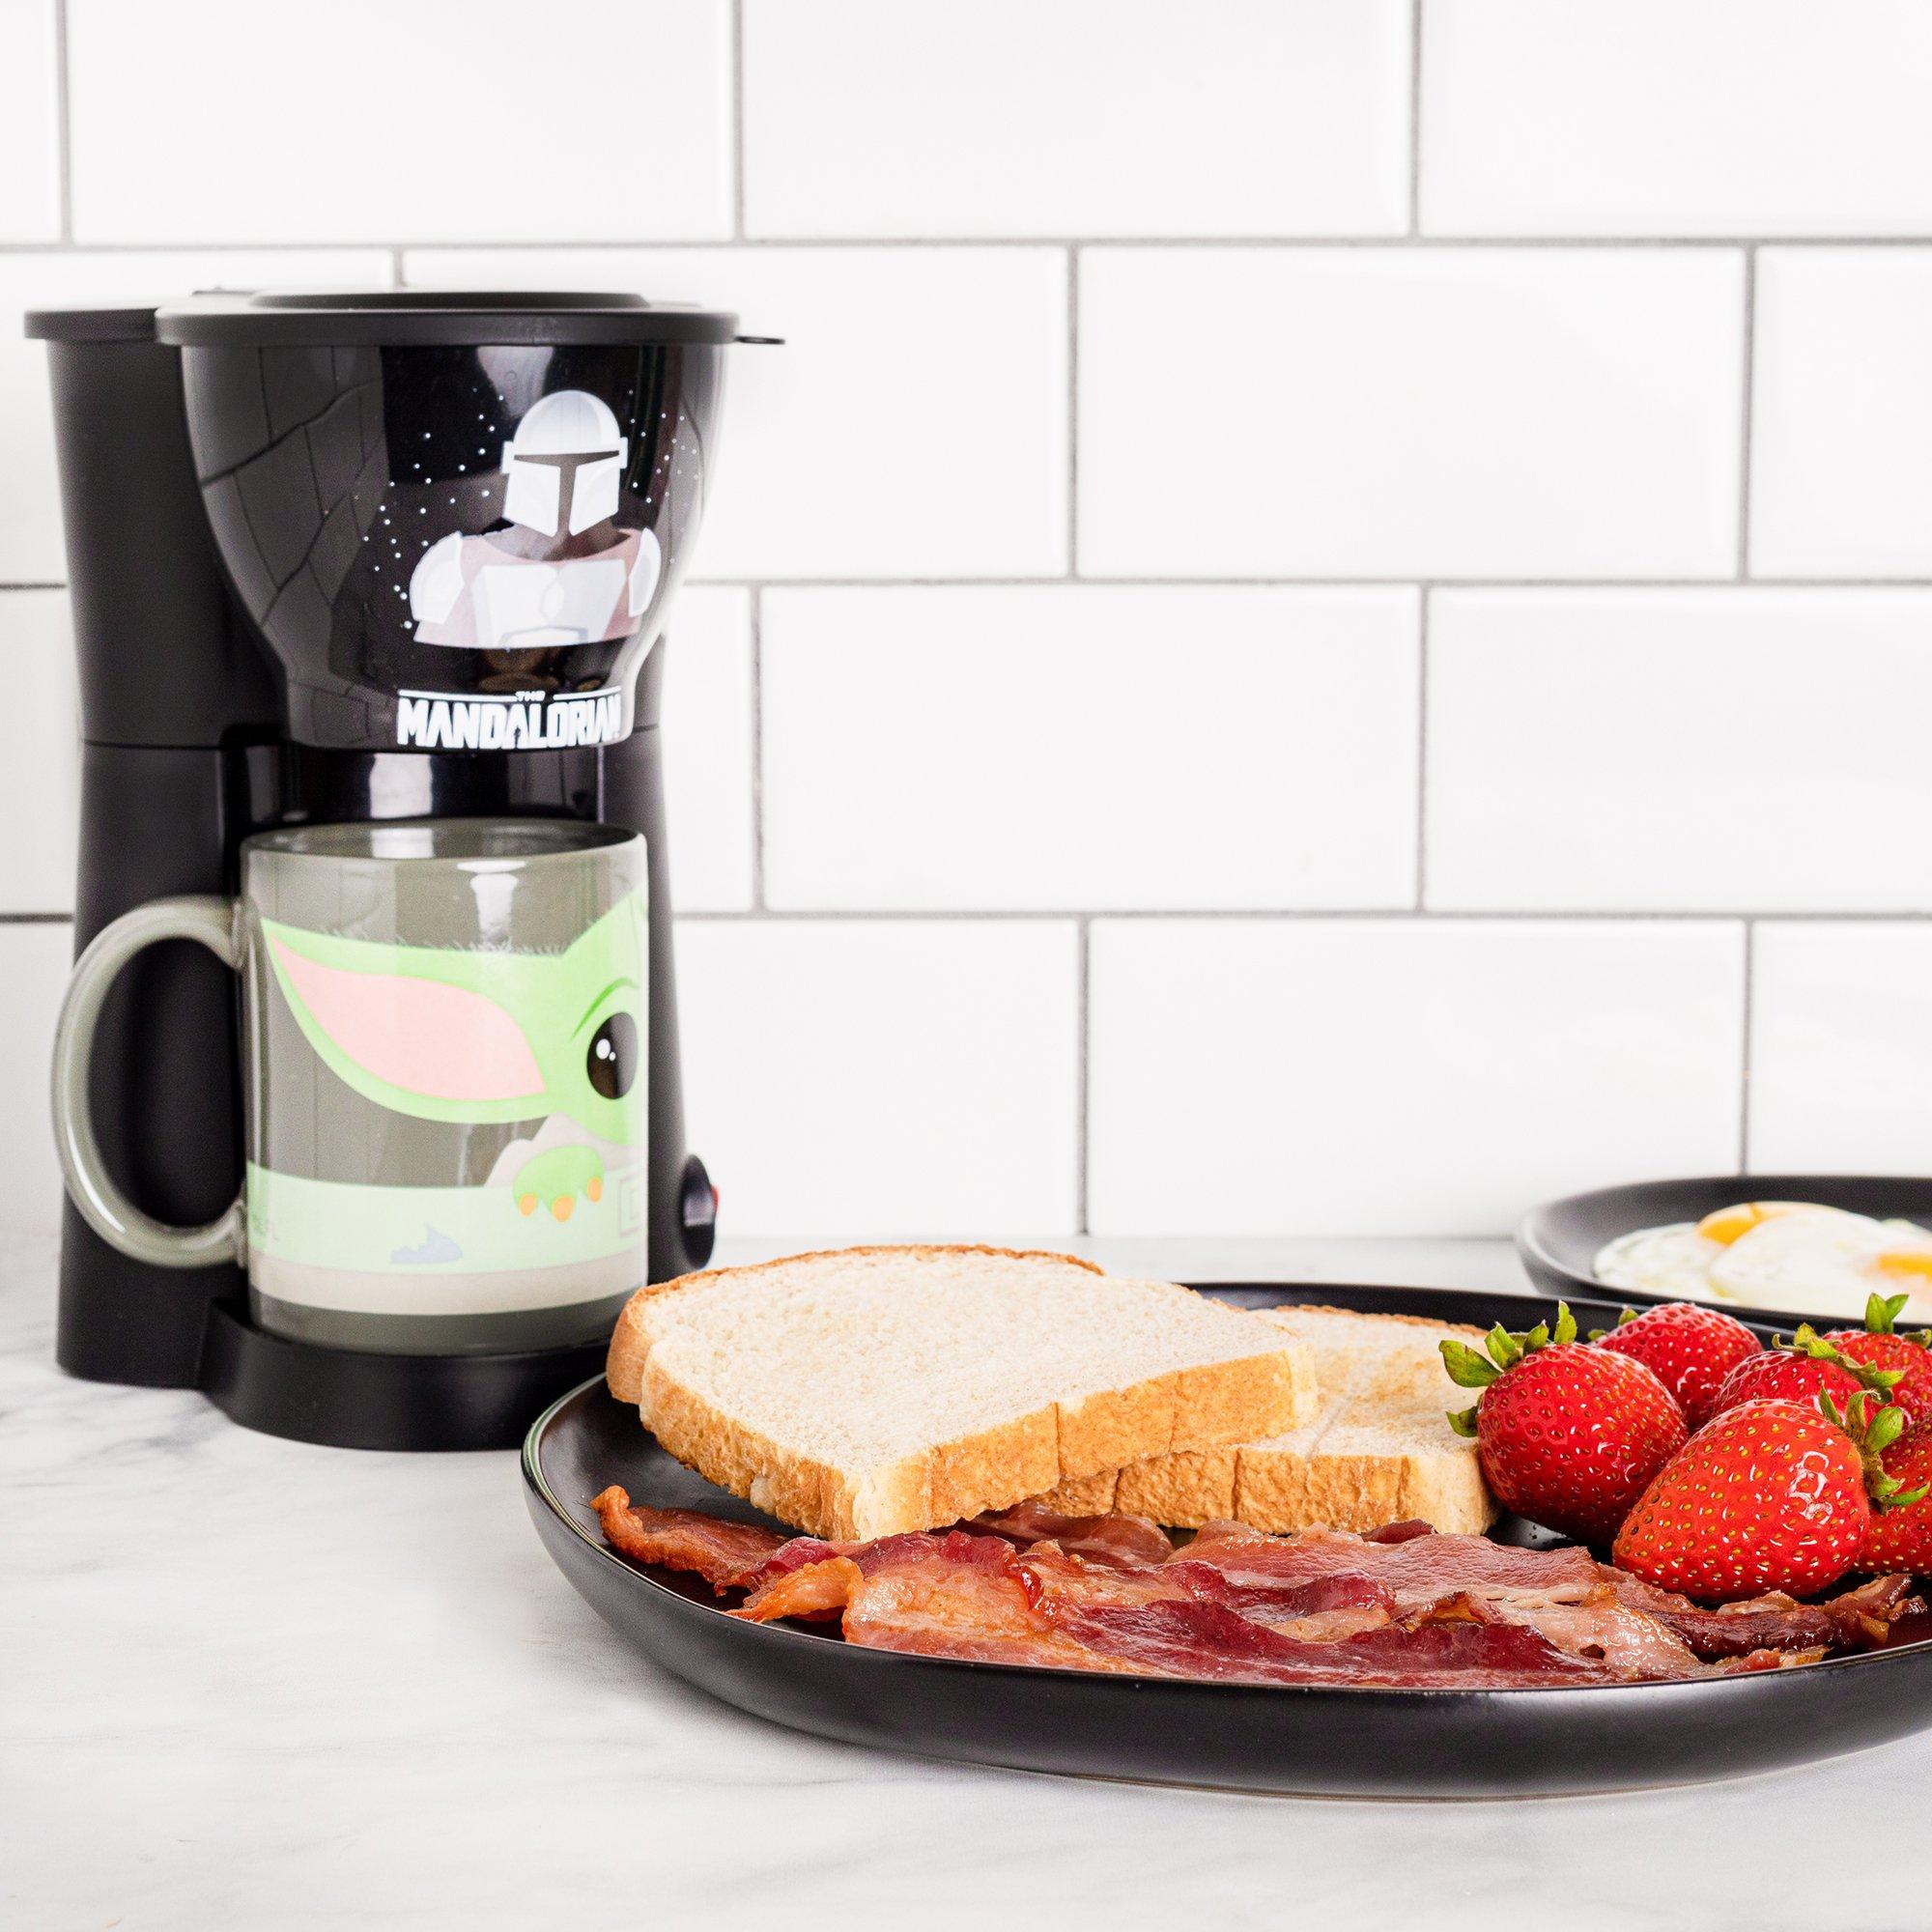 Mandalorian Single Cup Coffee Maker with Mug -- Gamestop Exclusive